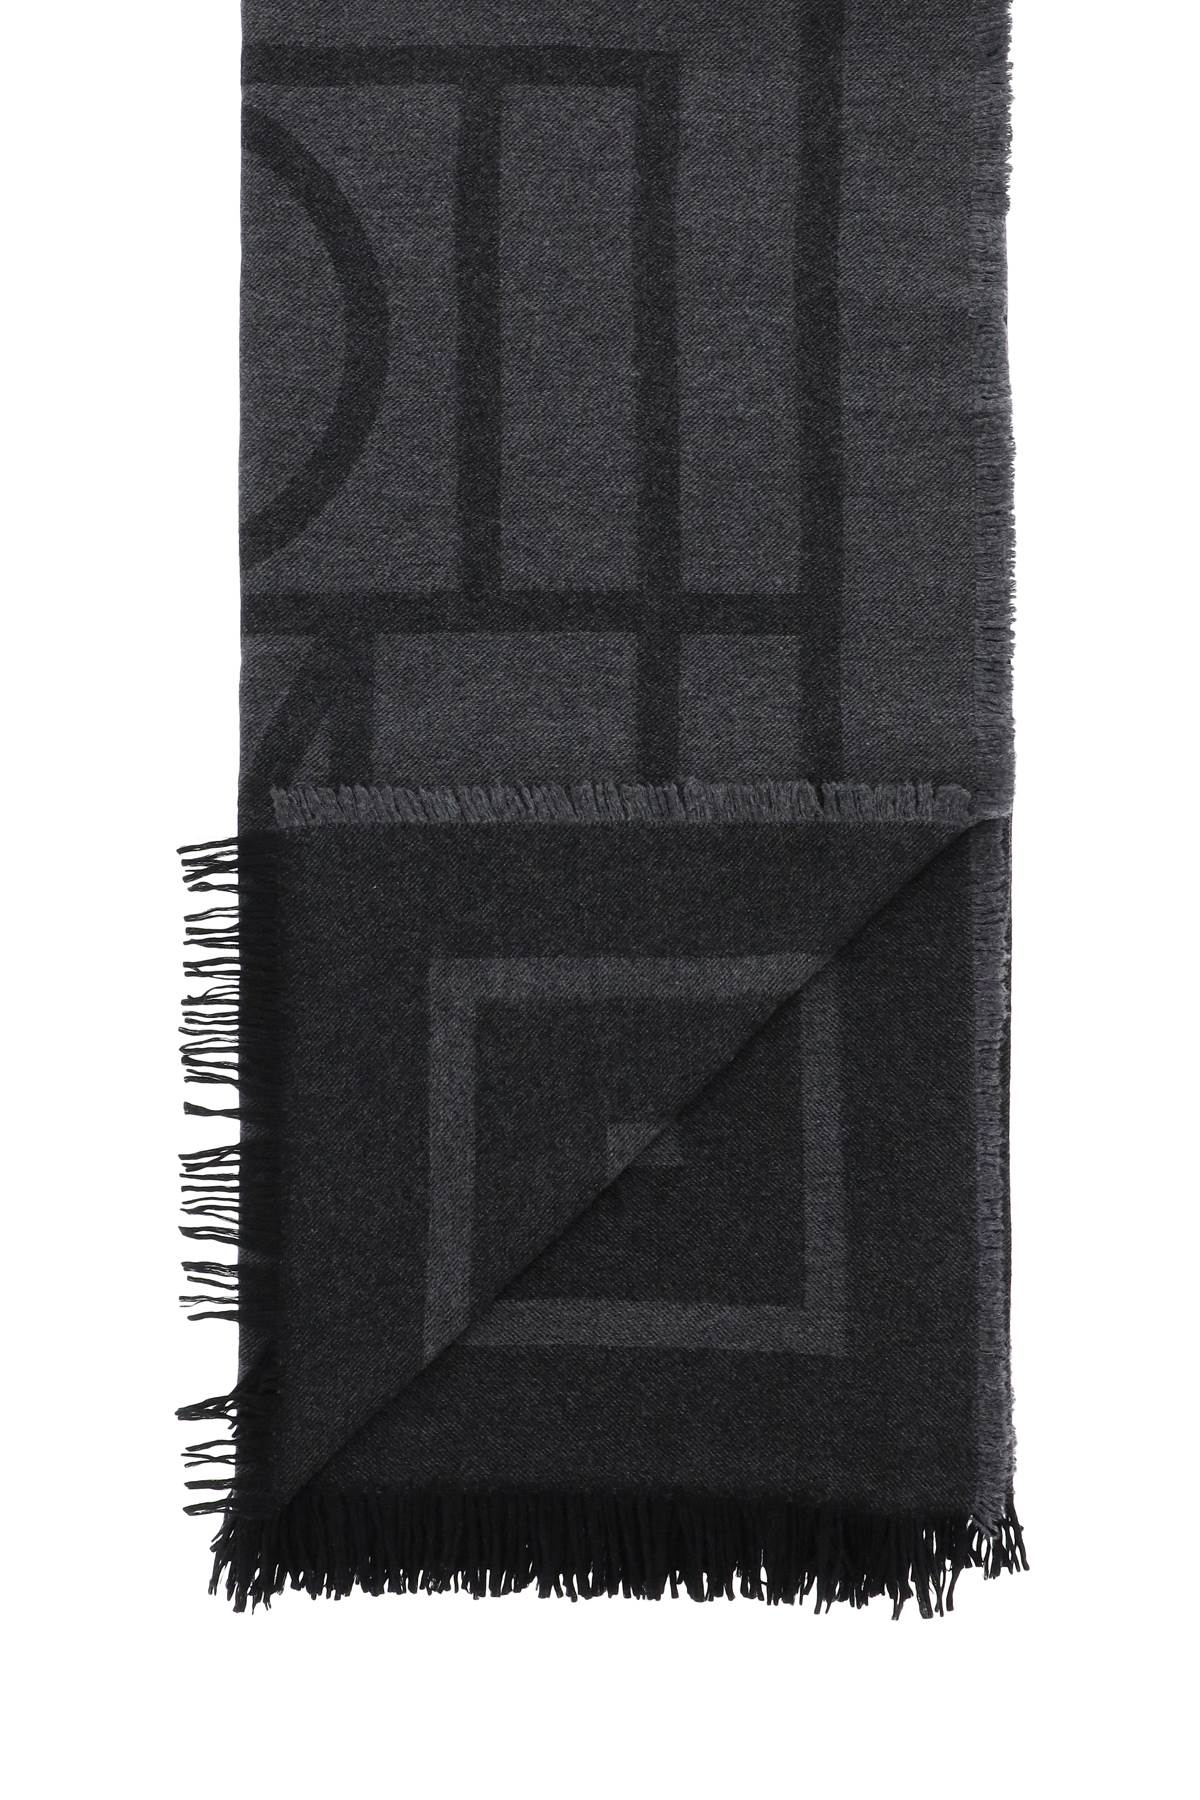 Toteme Toteme cashmere blend monogram scarf